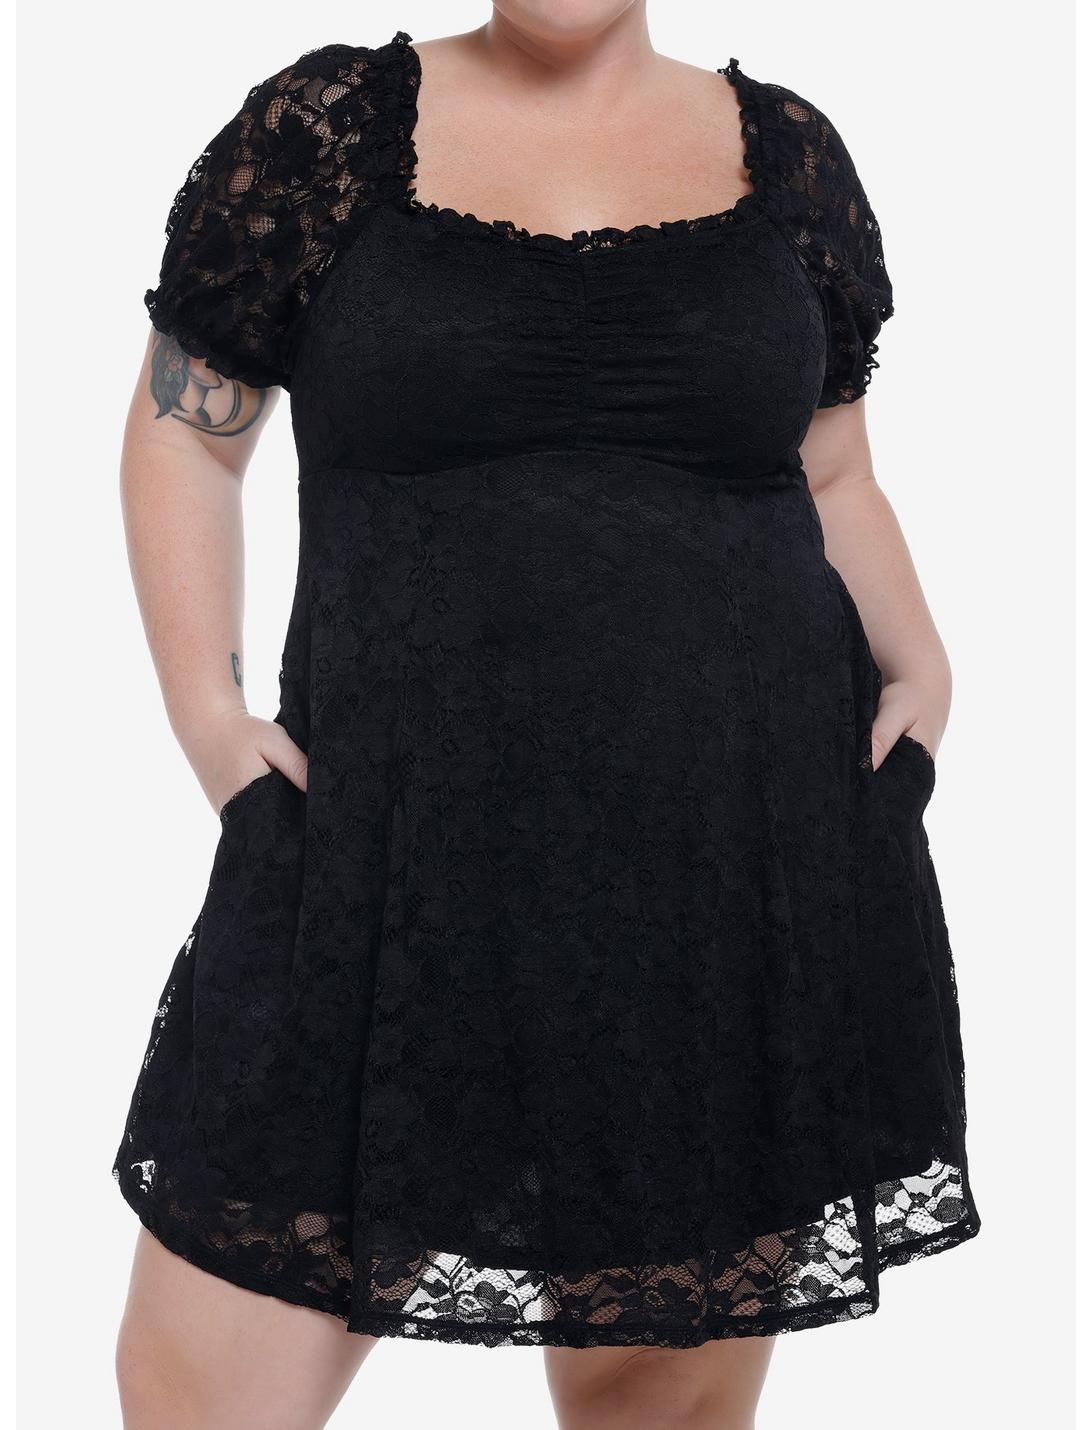 Black Lace Babydoll Dress Plus Size, BLACK, hi-res